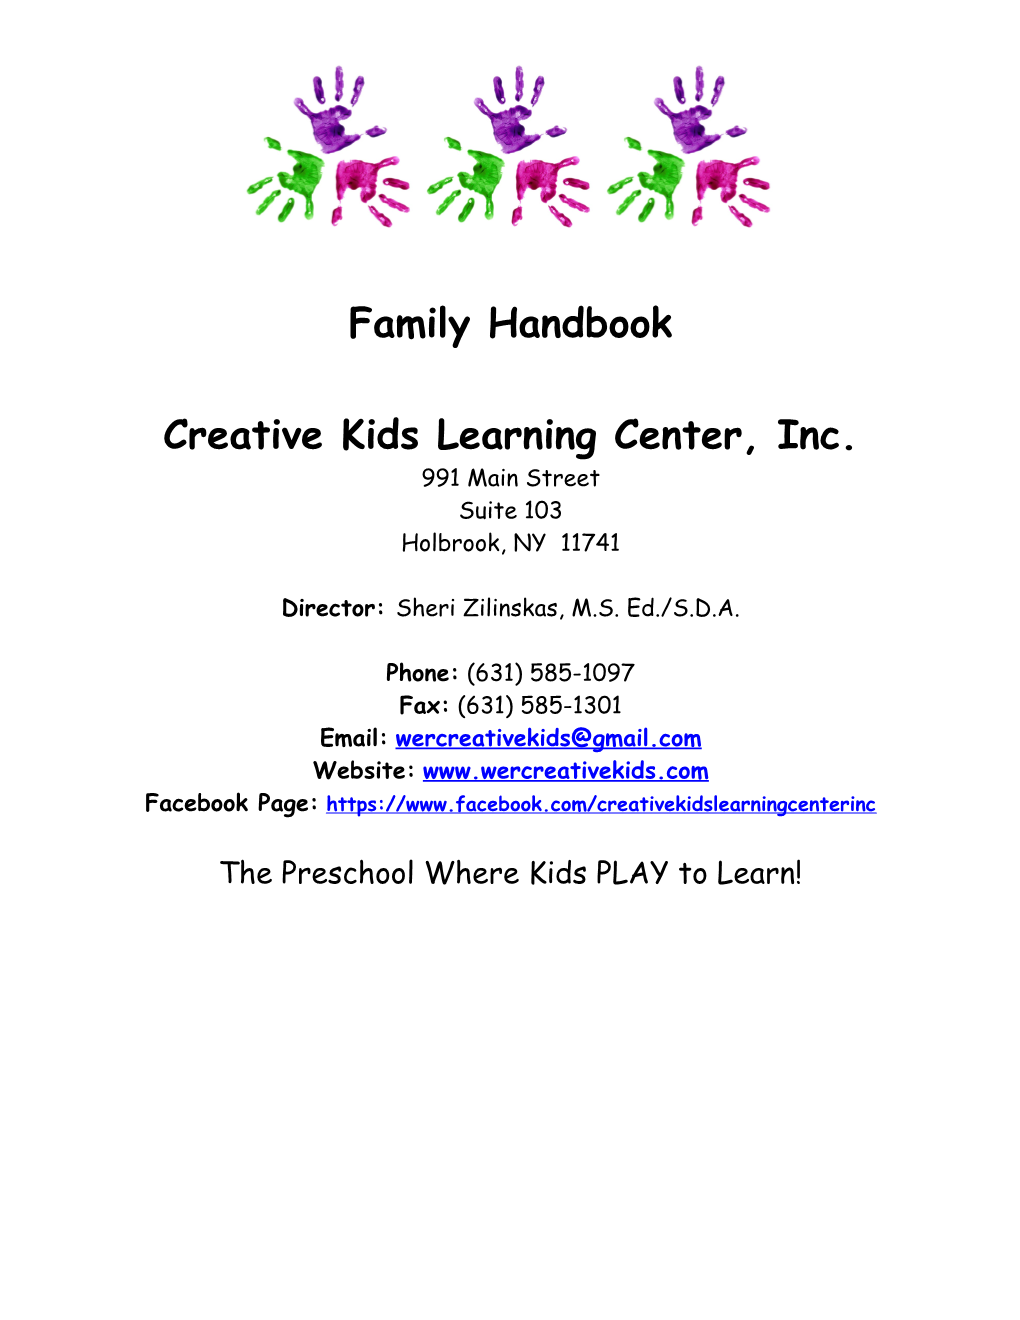 Creative Kids Learning Center, Inc